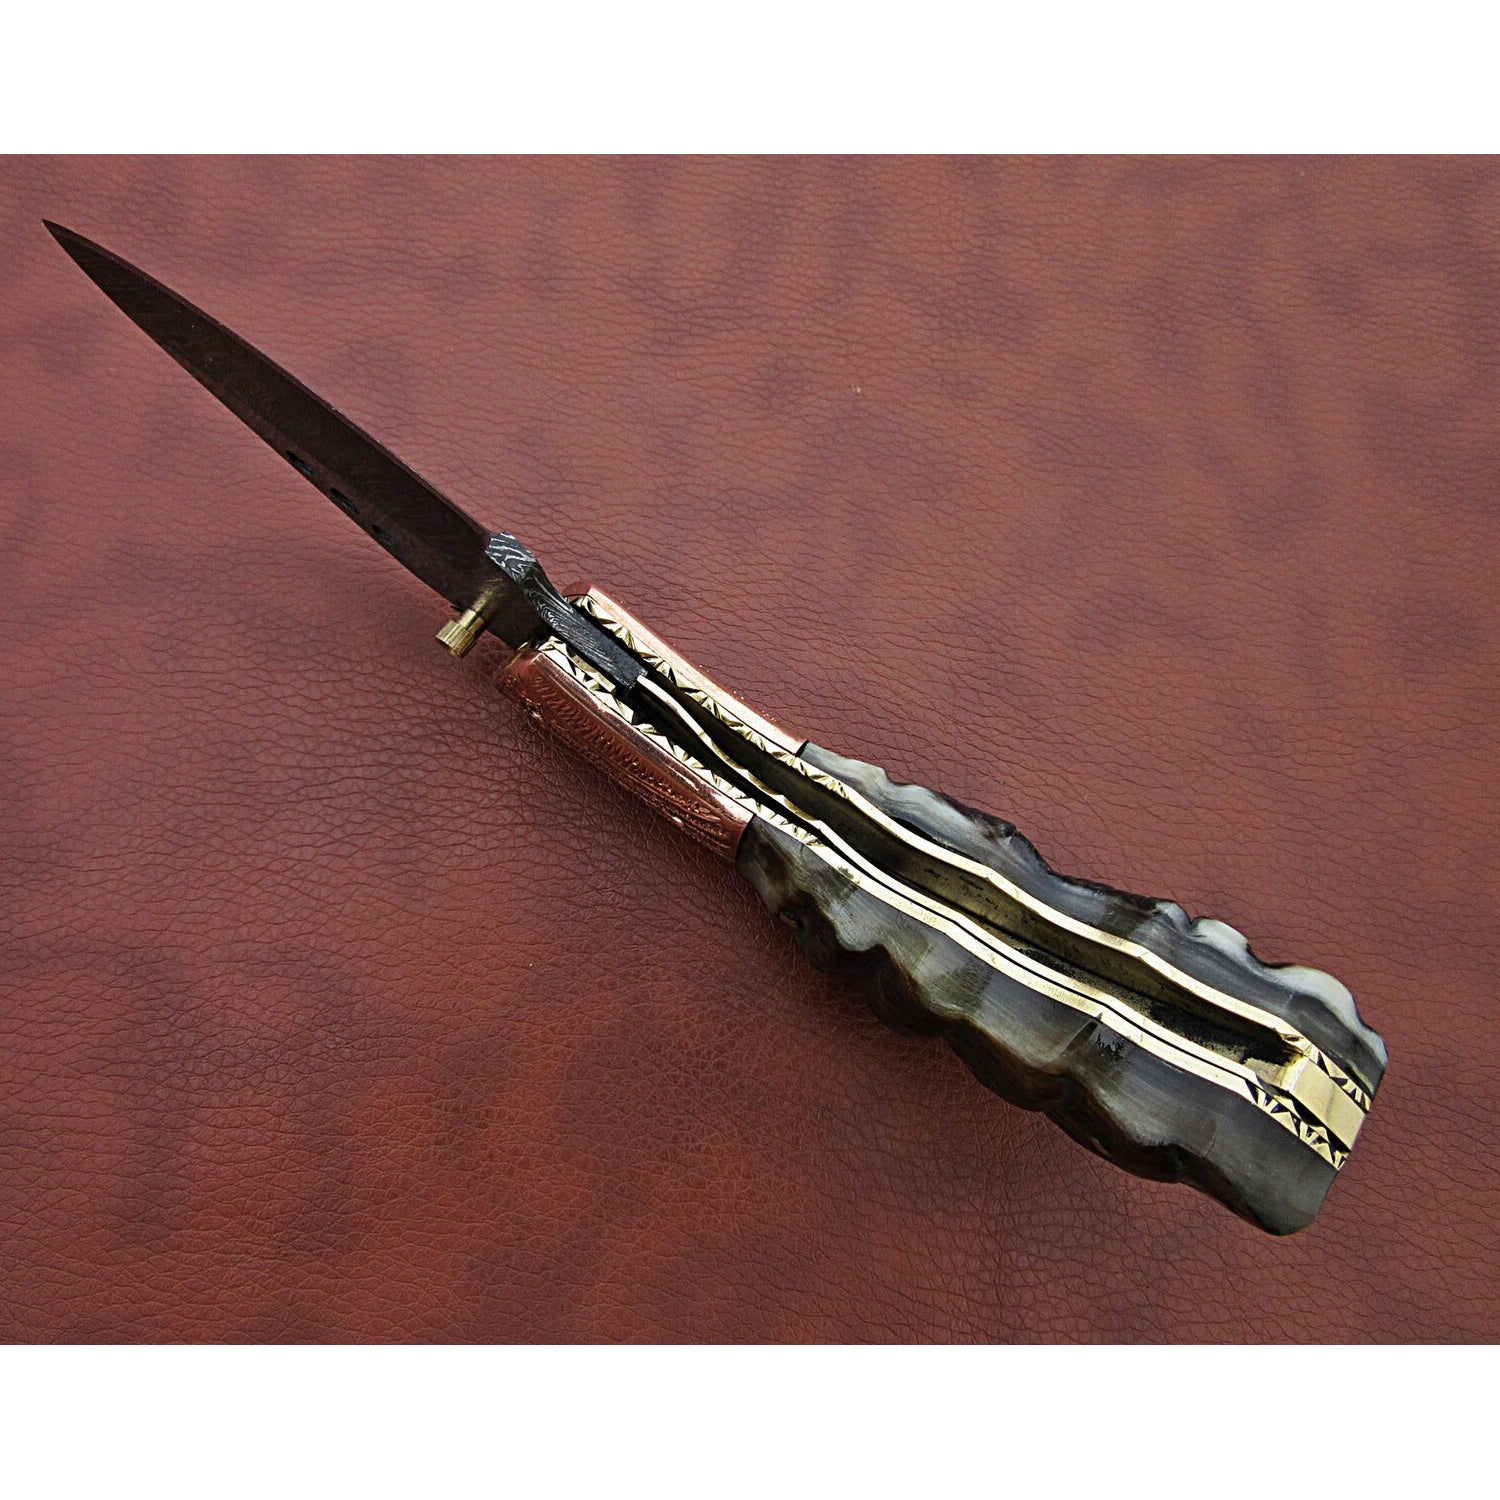 Cattak Damascus Steel Folding Knife With Liner Lock - Notbrand